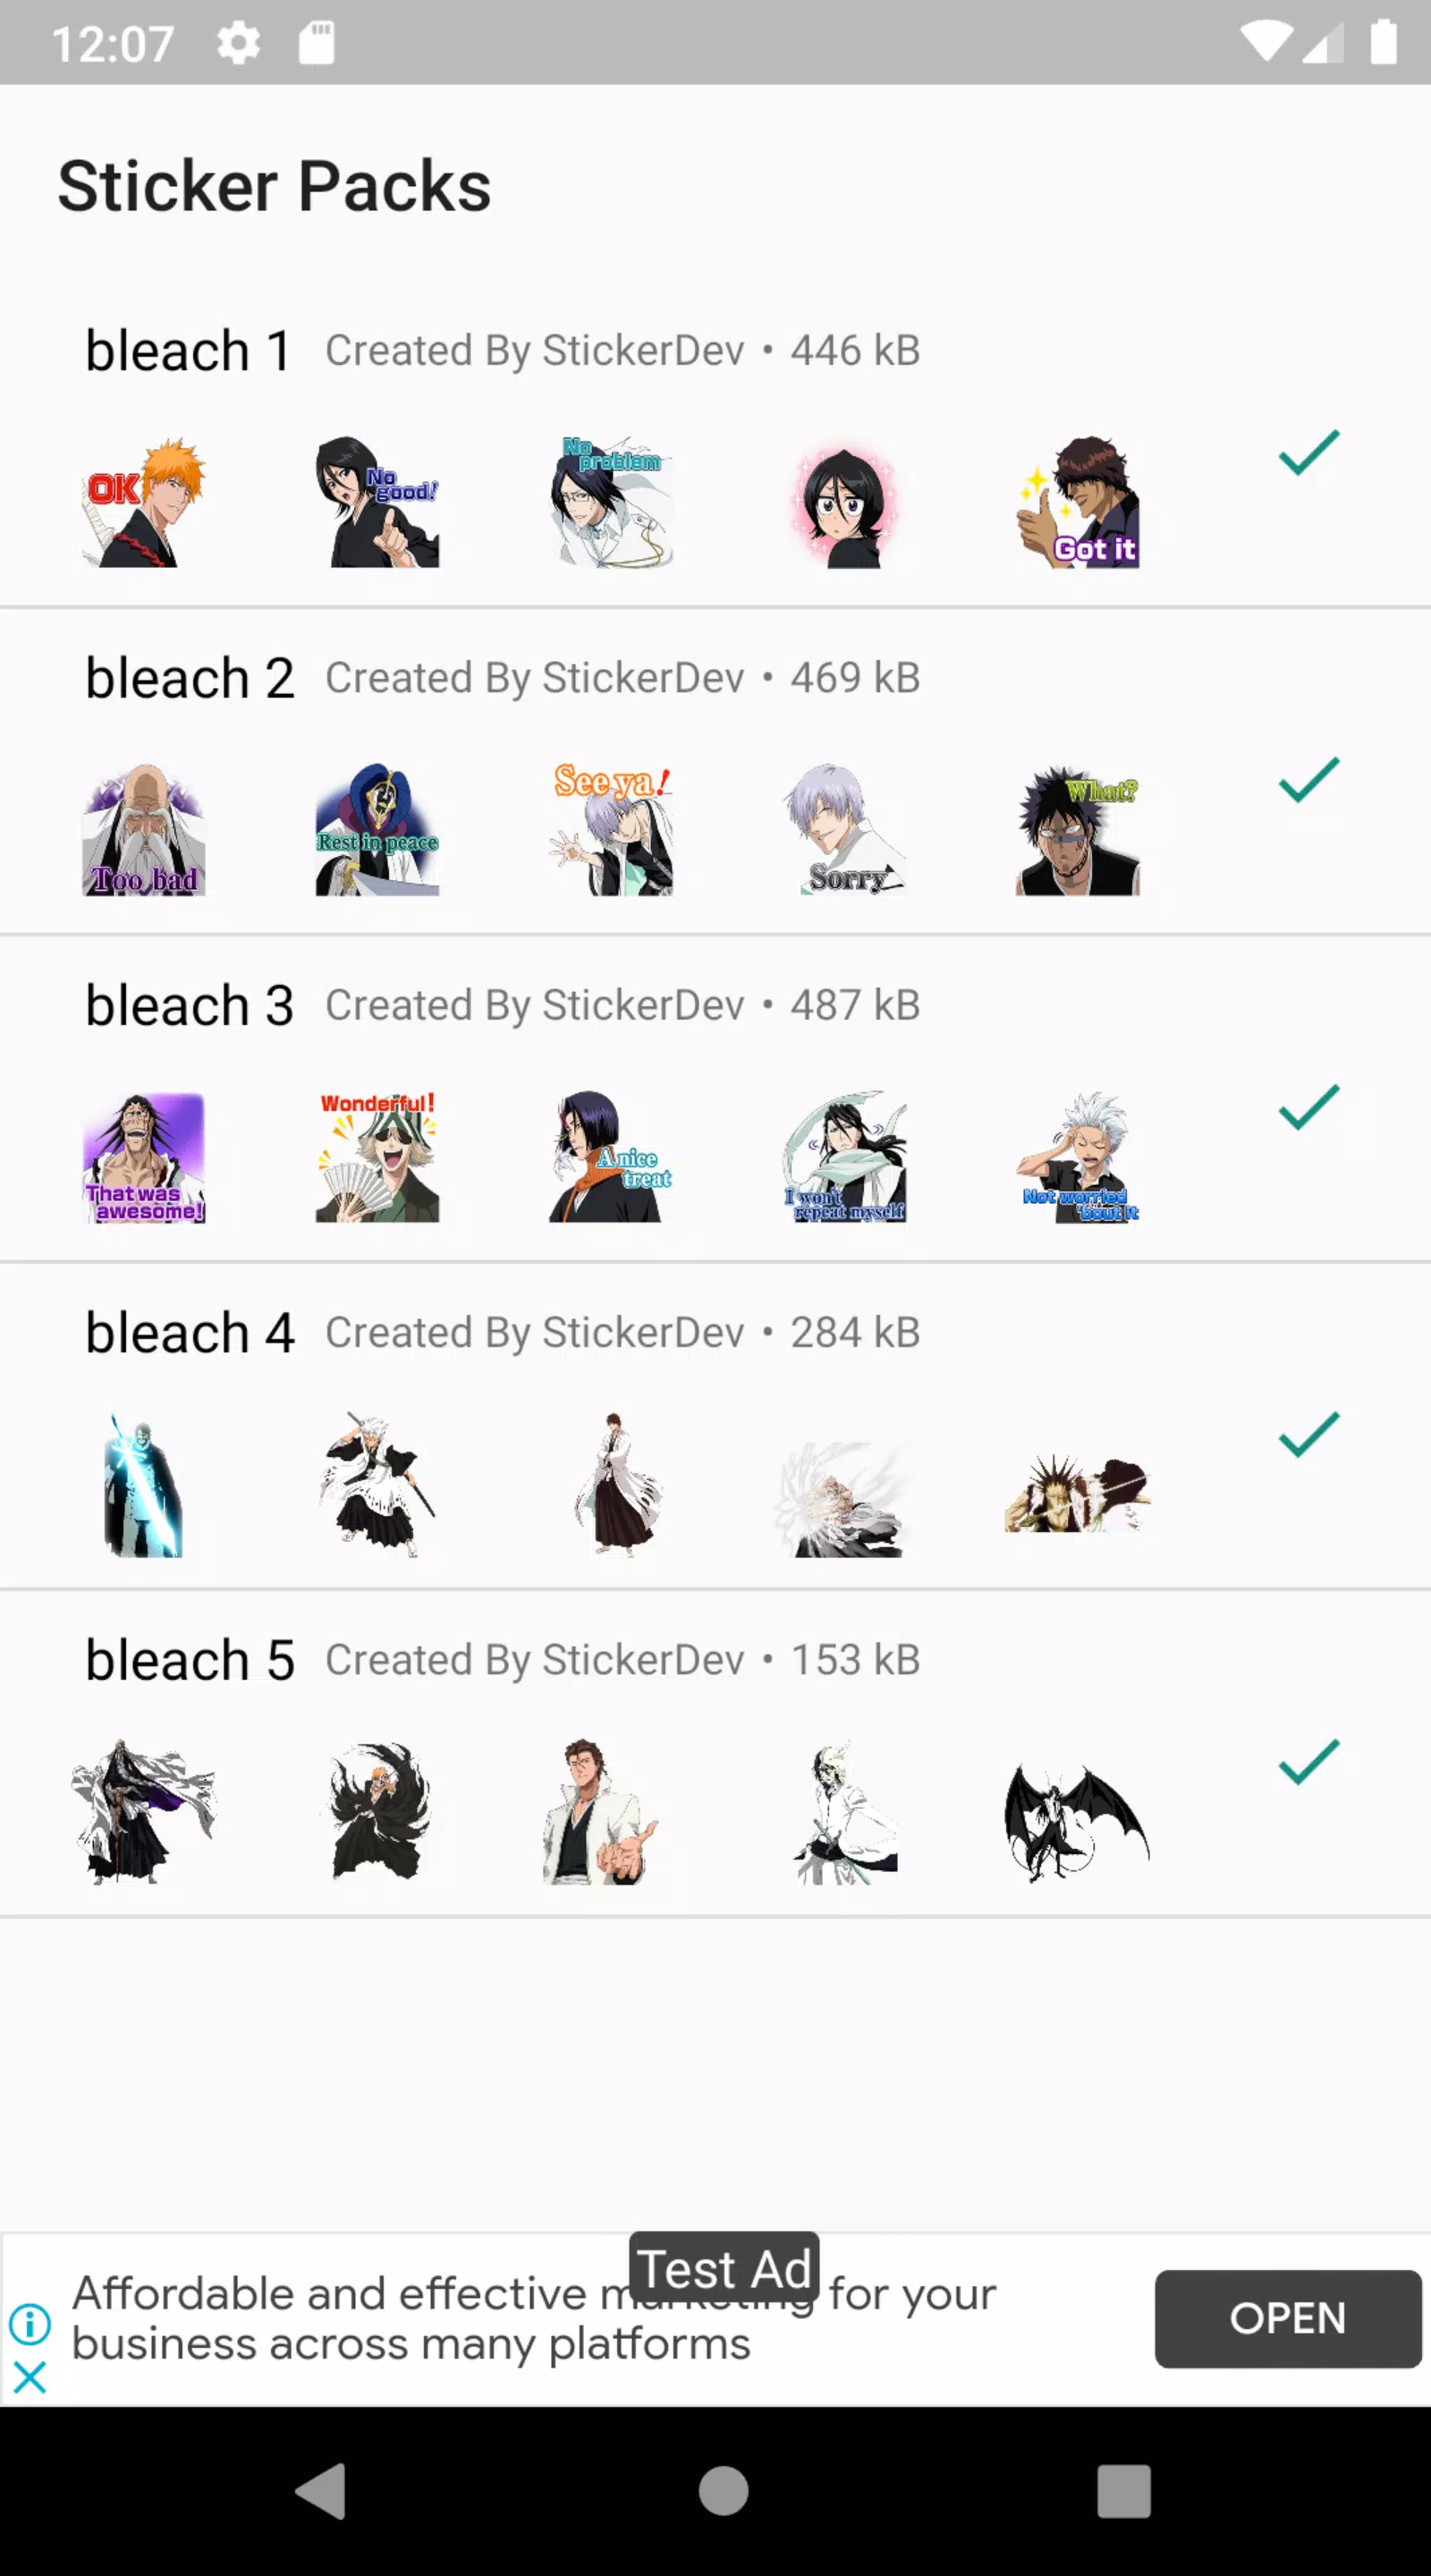 Bleach Animated telegram stickers